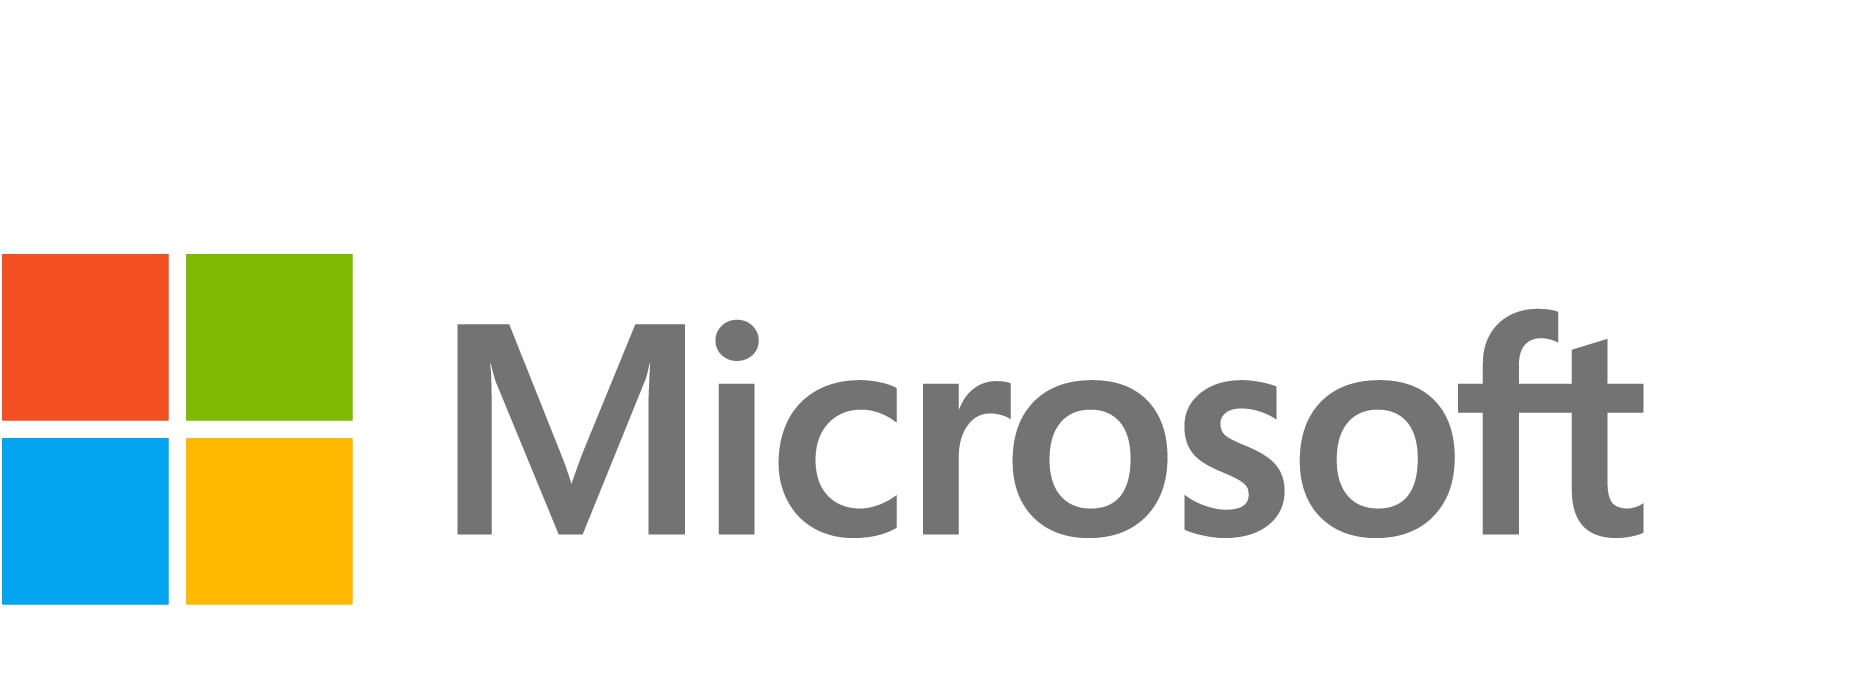 Microsoft Visual Studio Professional 2022 - licence - 1 utilisateur